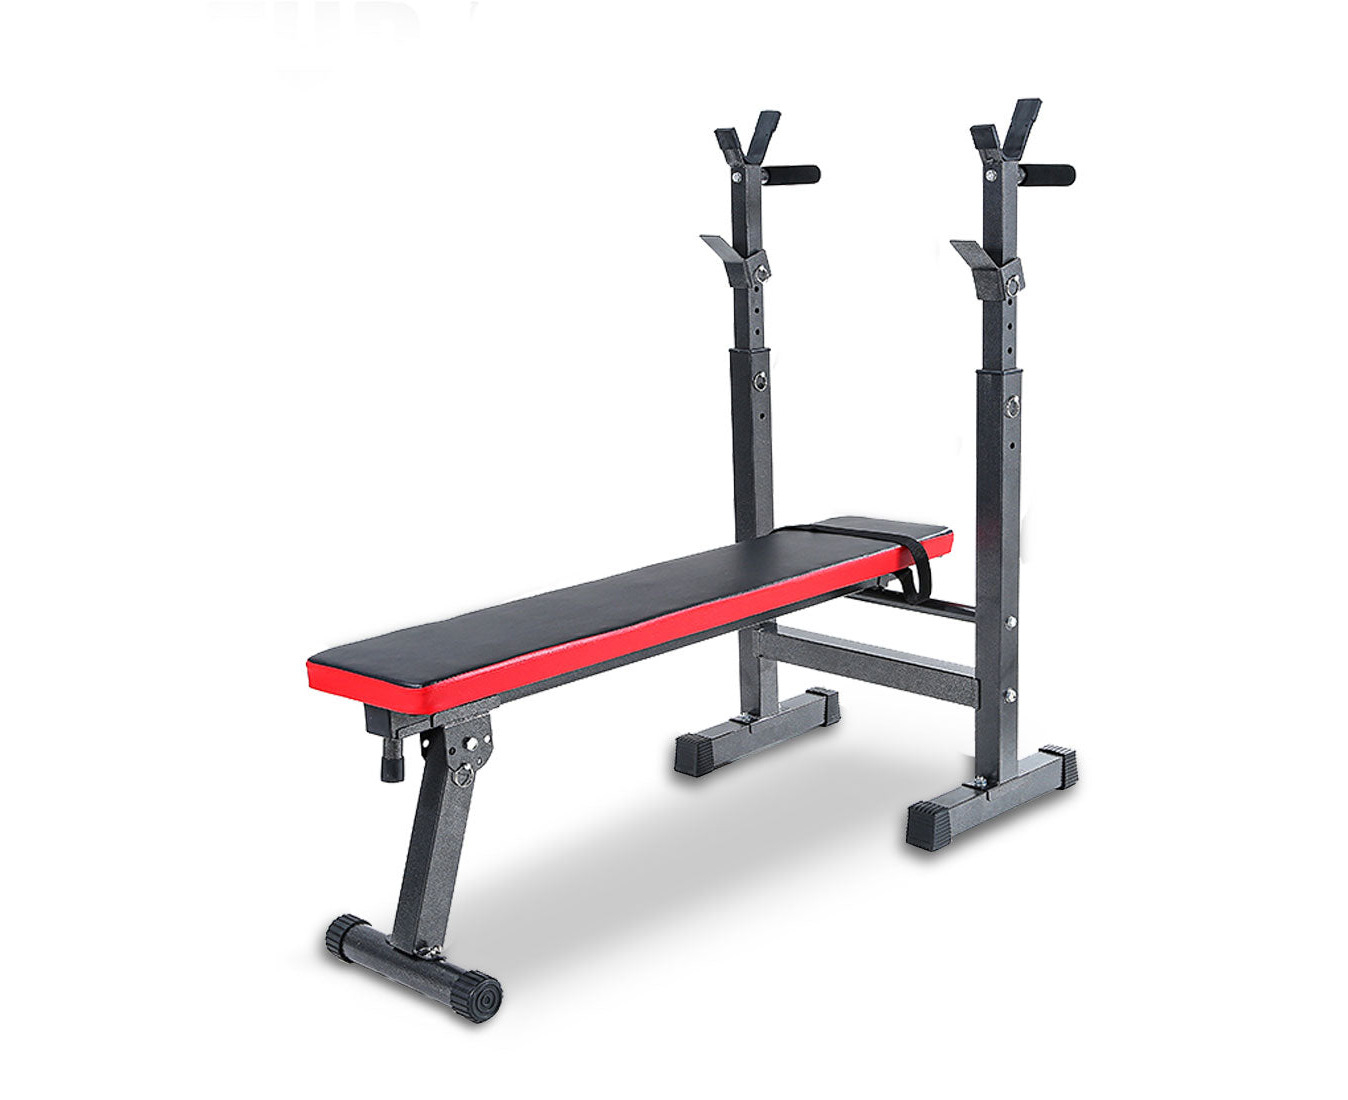 Flat weight bench versus adjustable weight bench